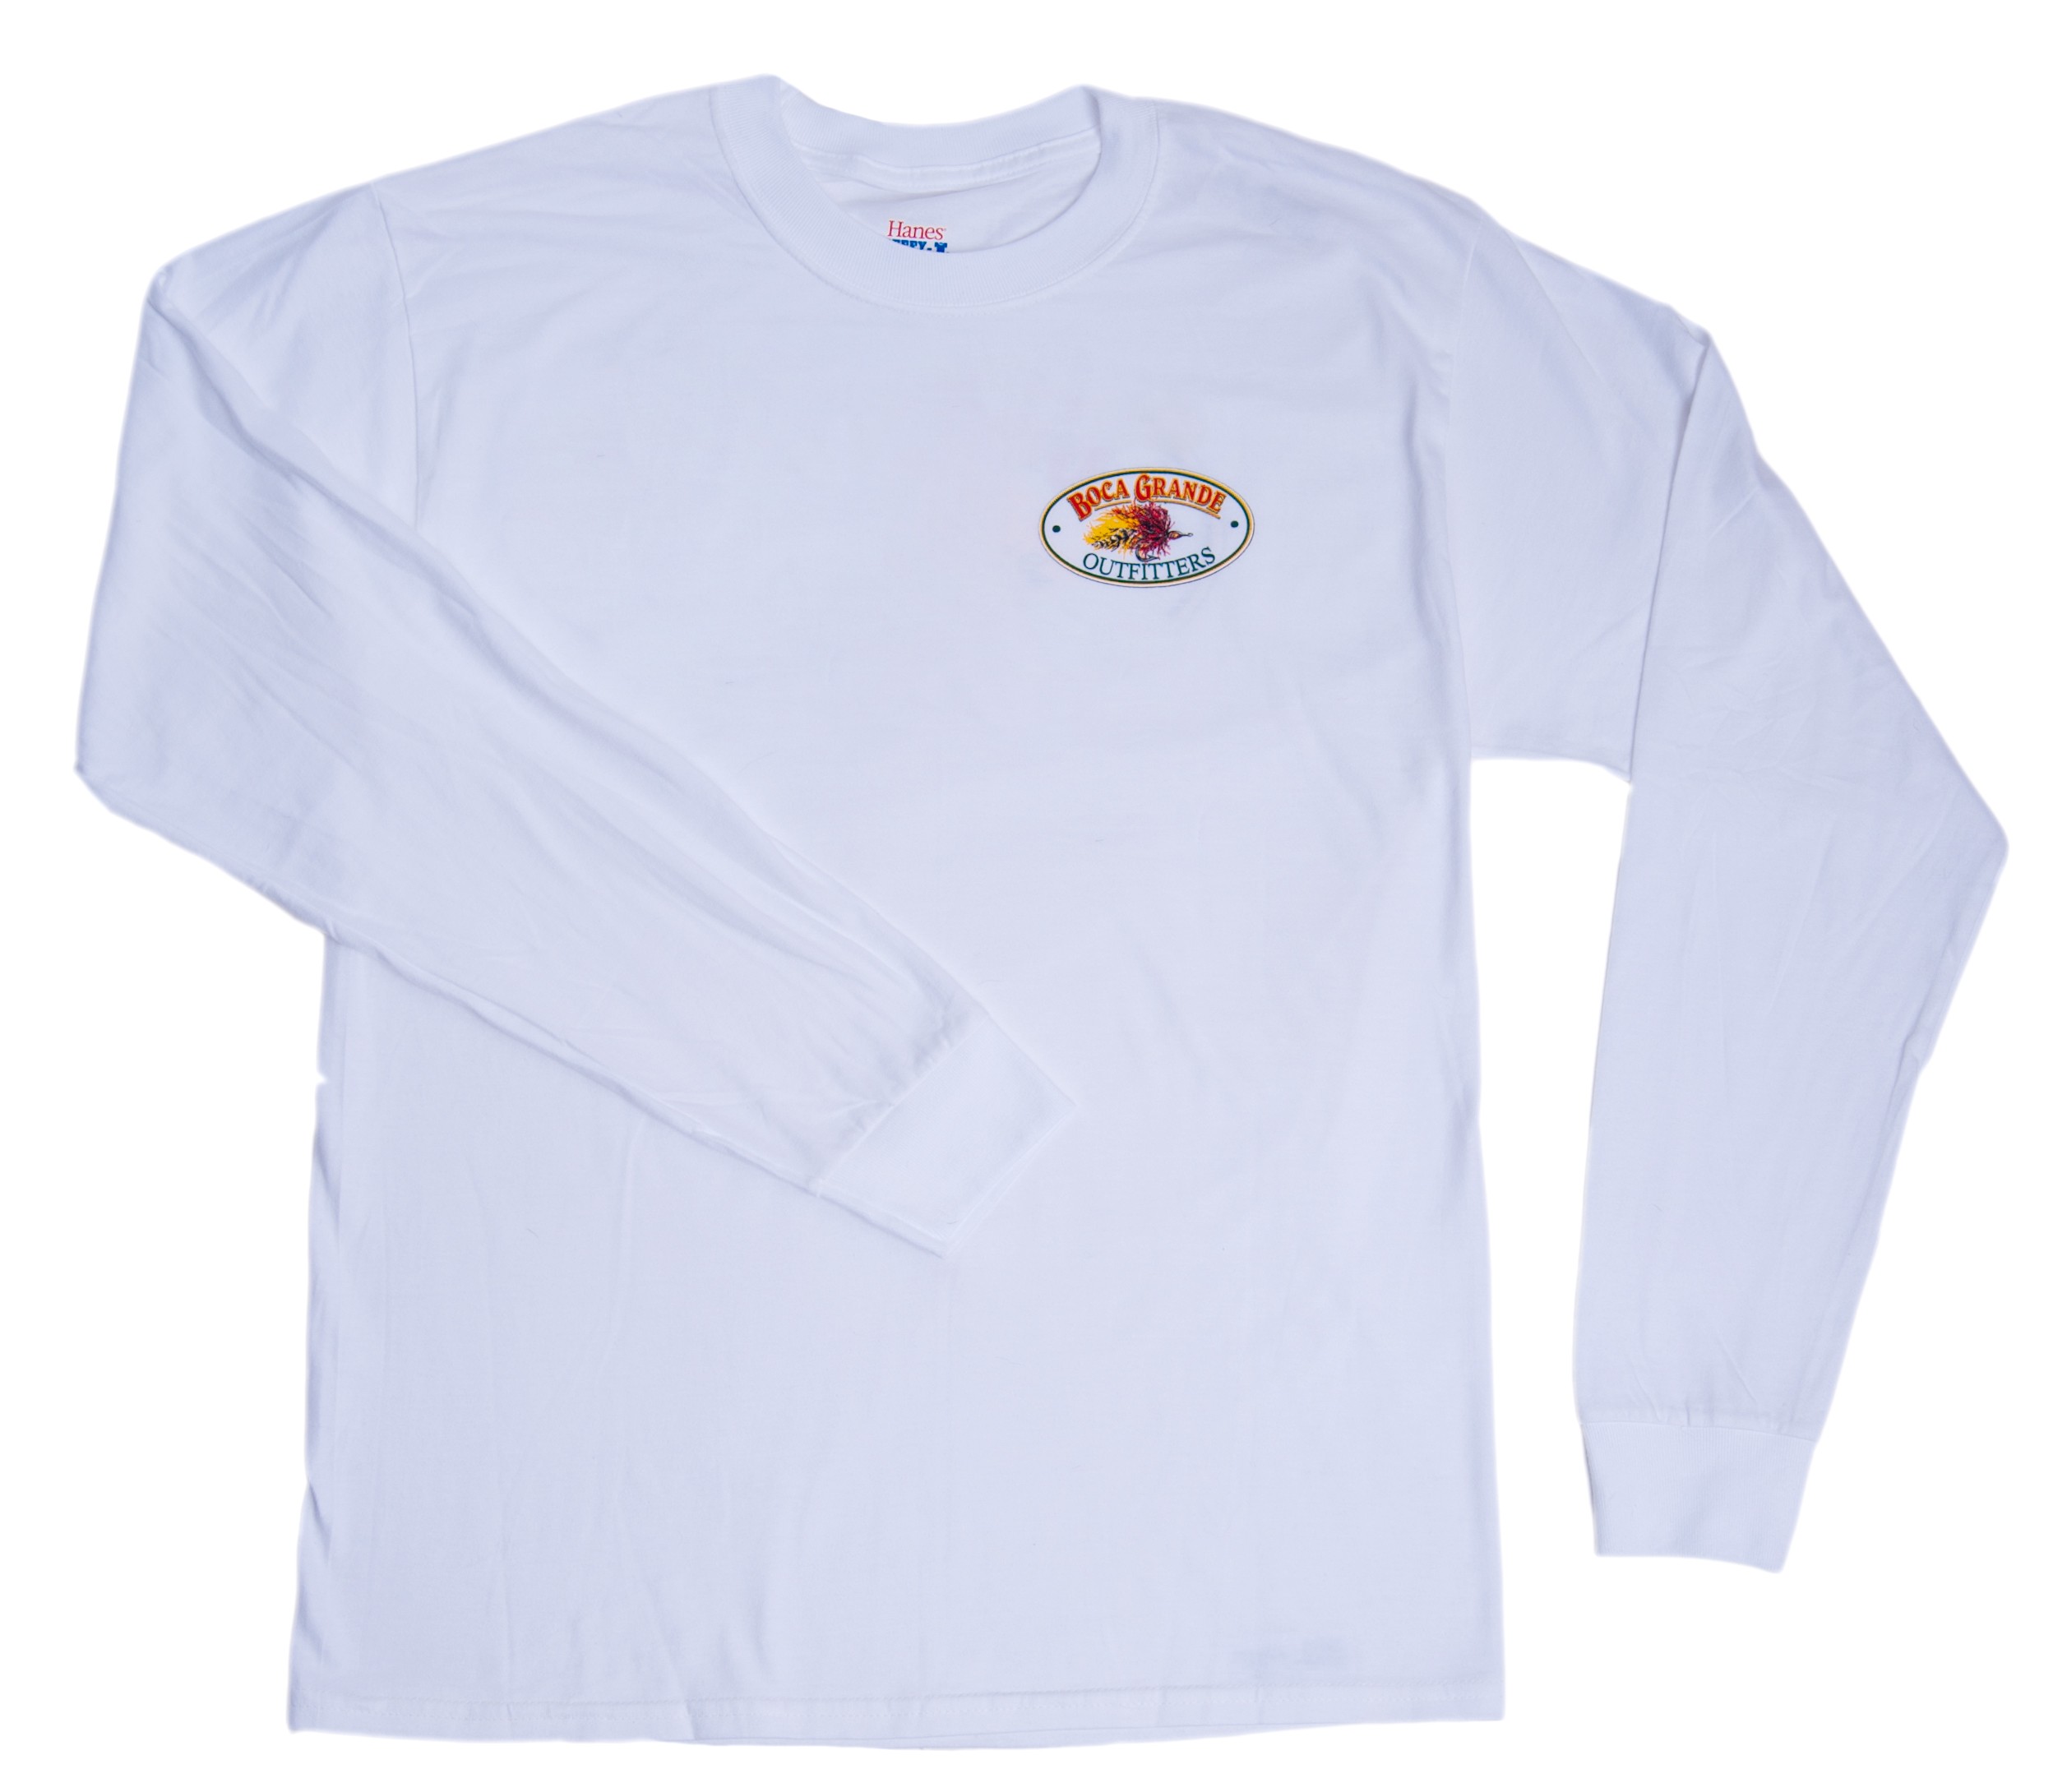 Boca Grande Outfitters Long Sleeved Fly Logo T-Shirt - White